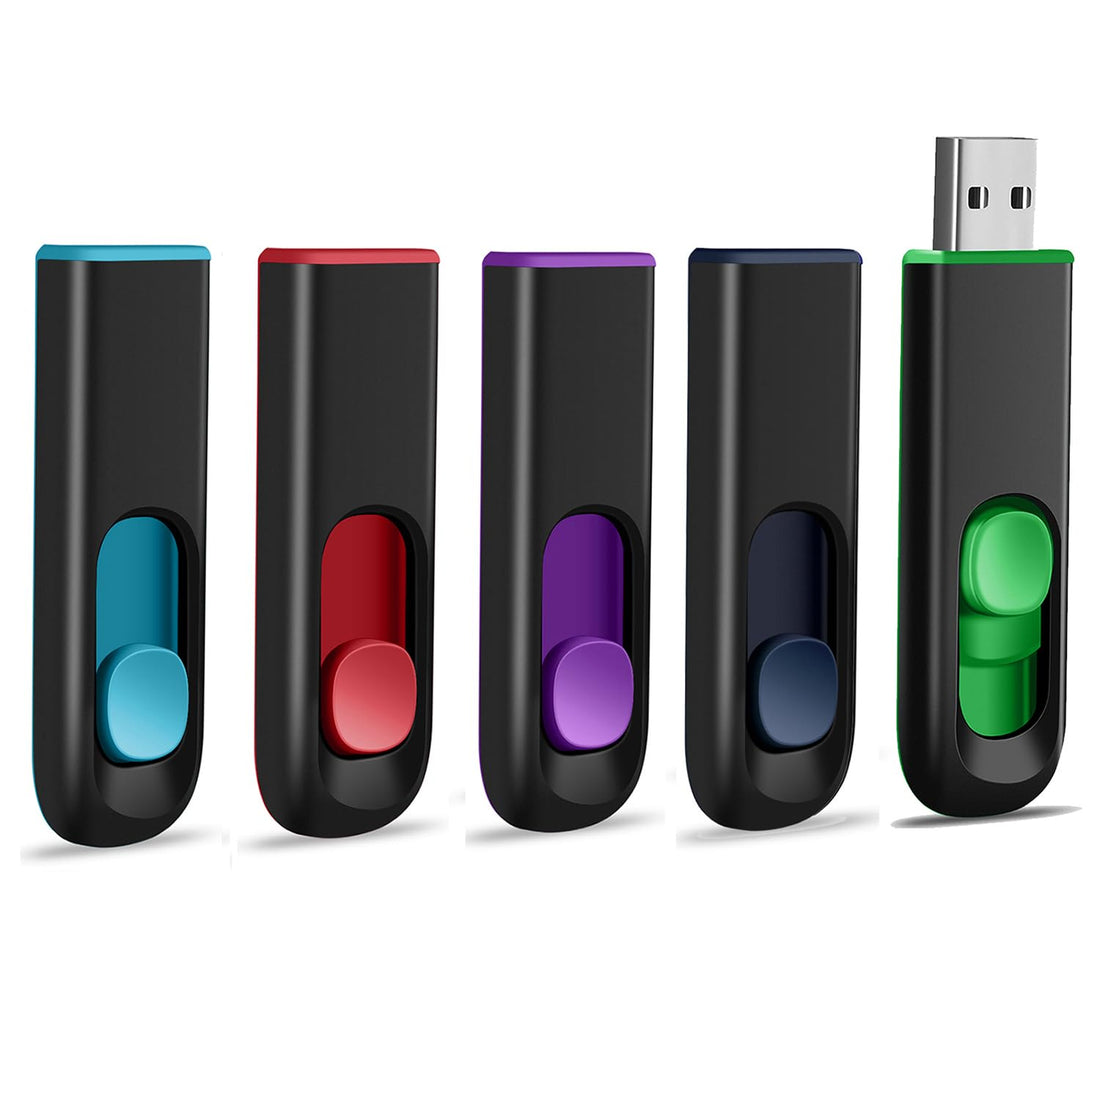 MAKACTUA 5 Pack 64GB USB Flash Drive, USB 2.0 Memory Stick Thumb Drive Pen Drives Jump Drive for Data Storage Multiple Color